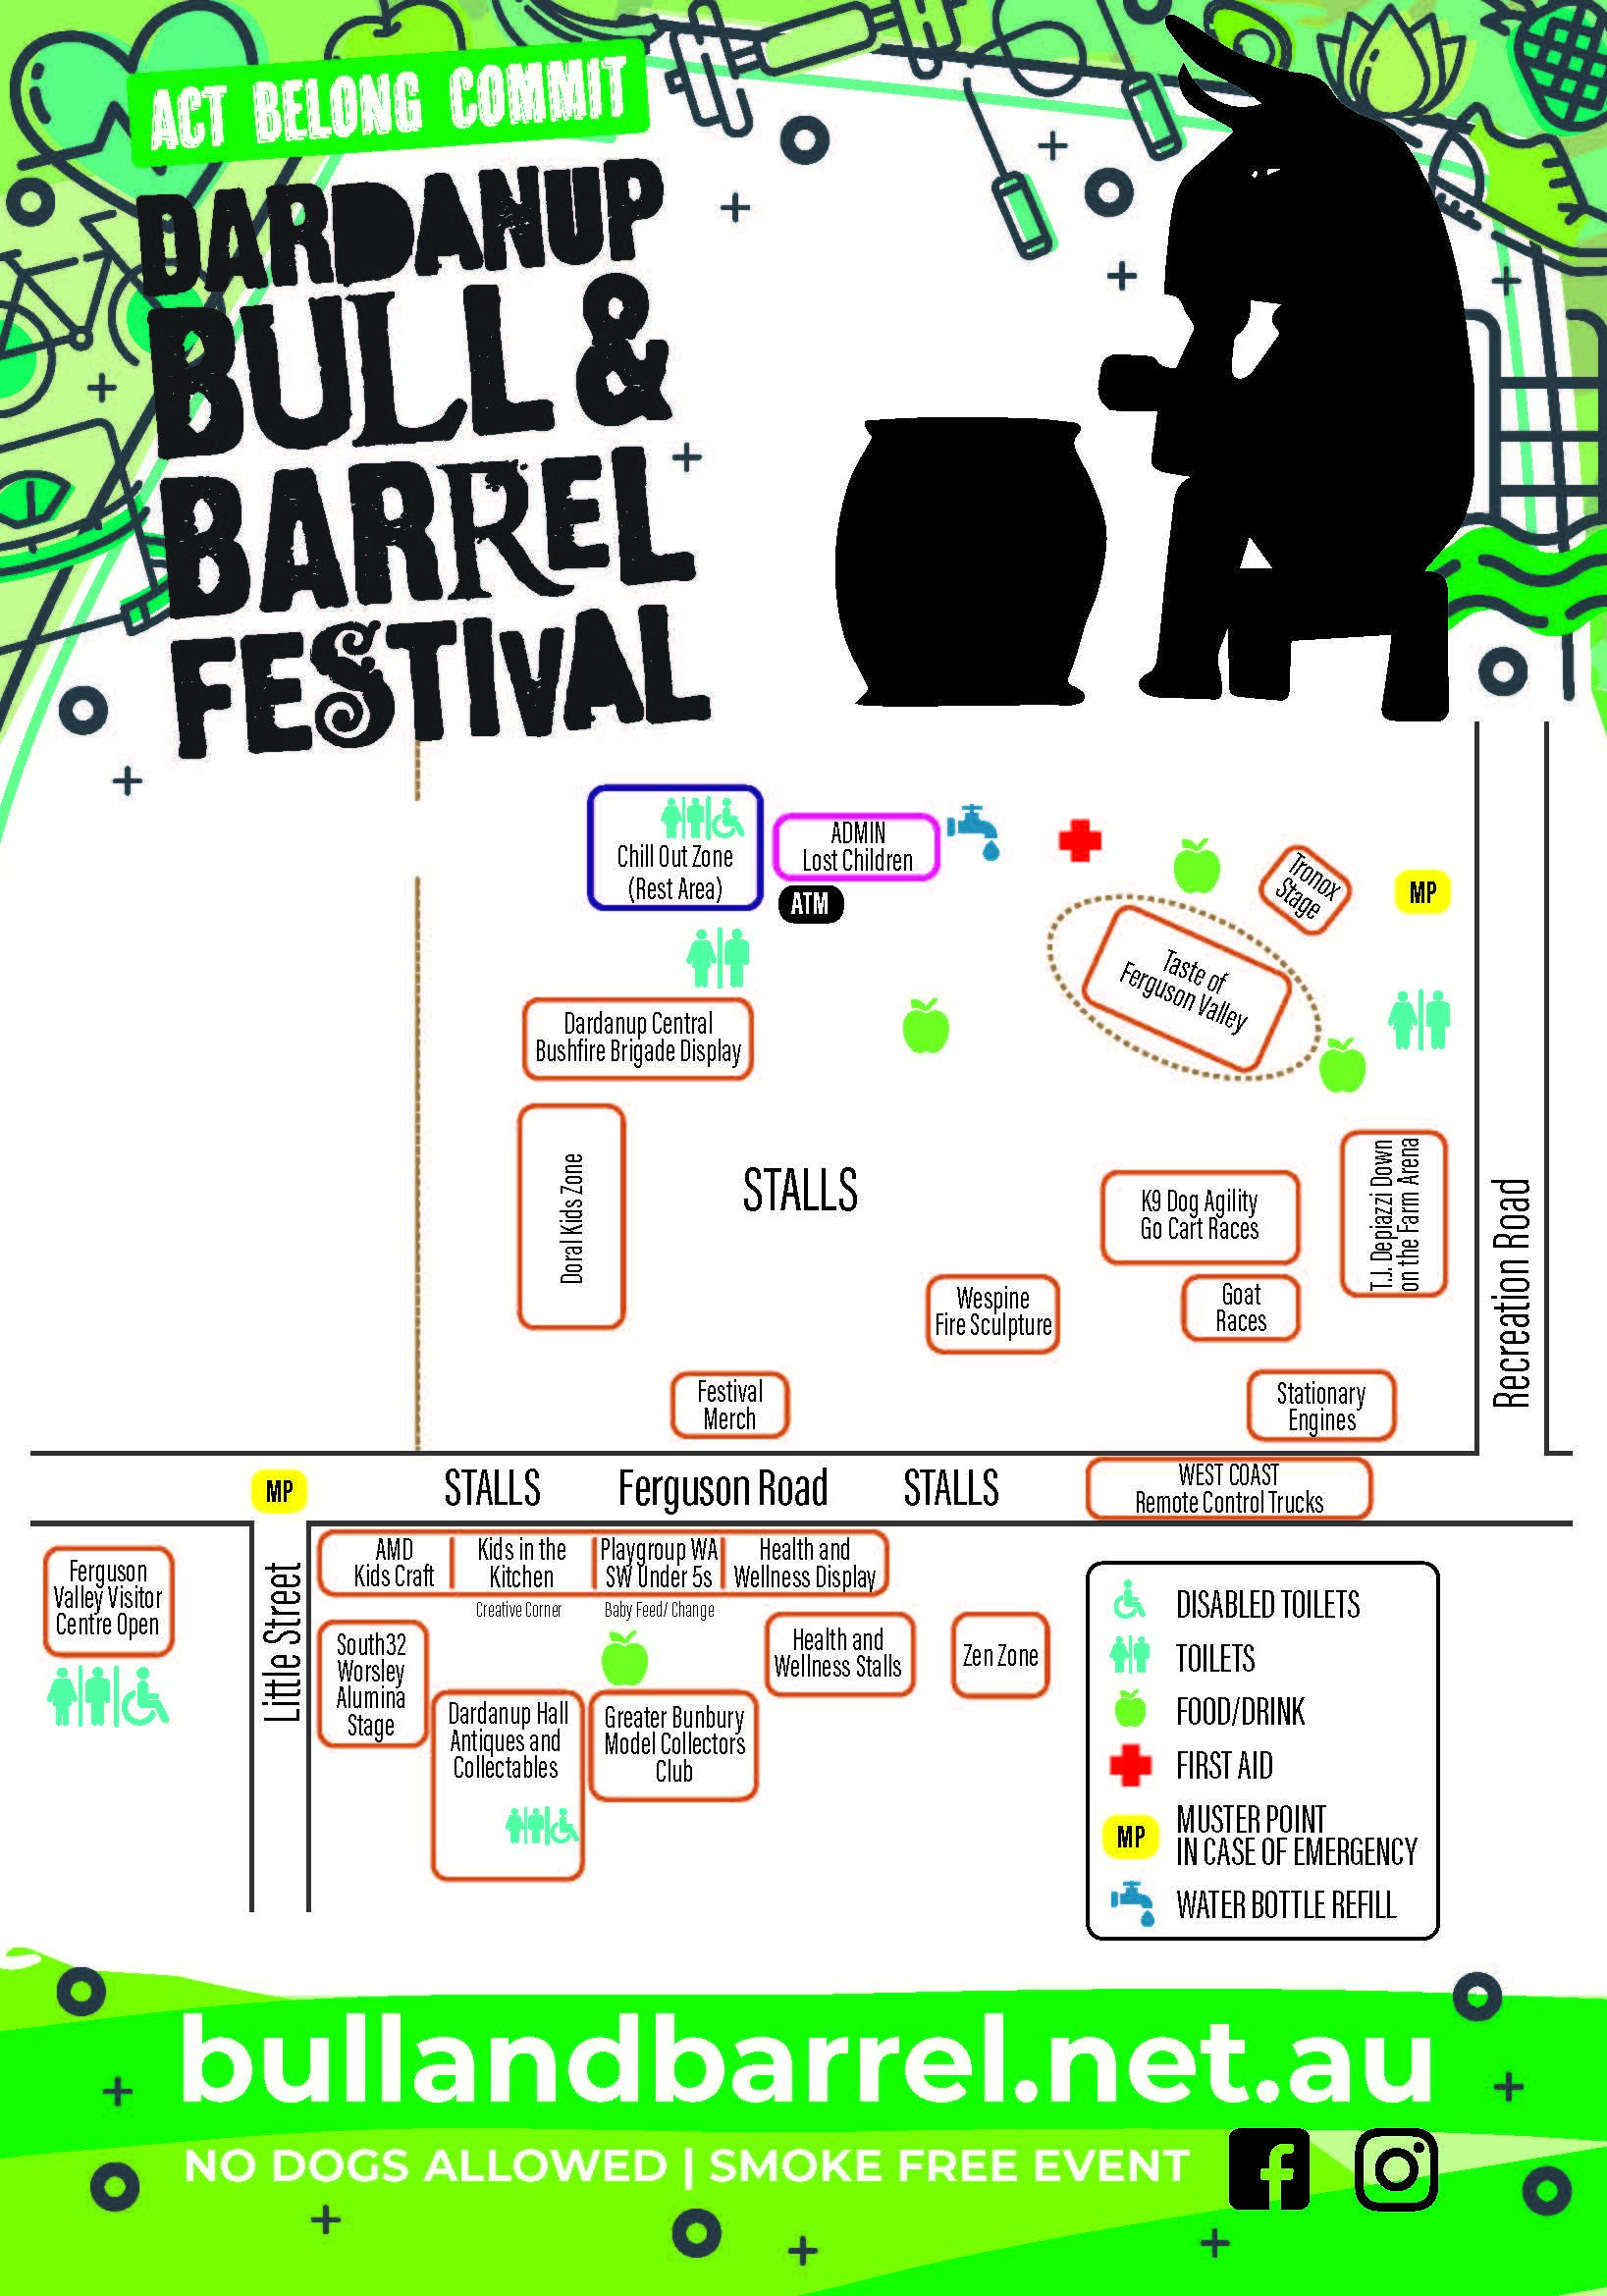 2023 Dardanup Bull & Barrel Festival - MAP